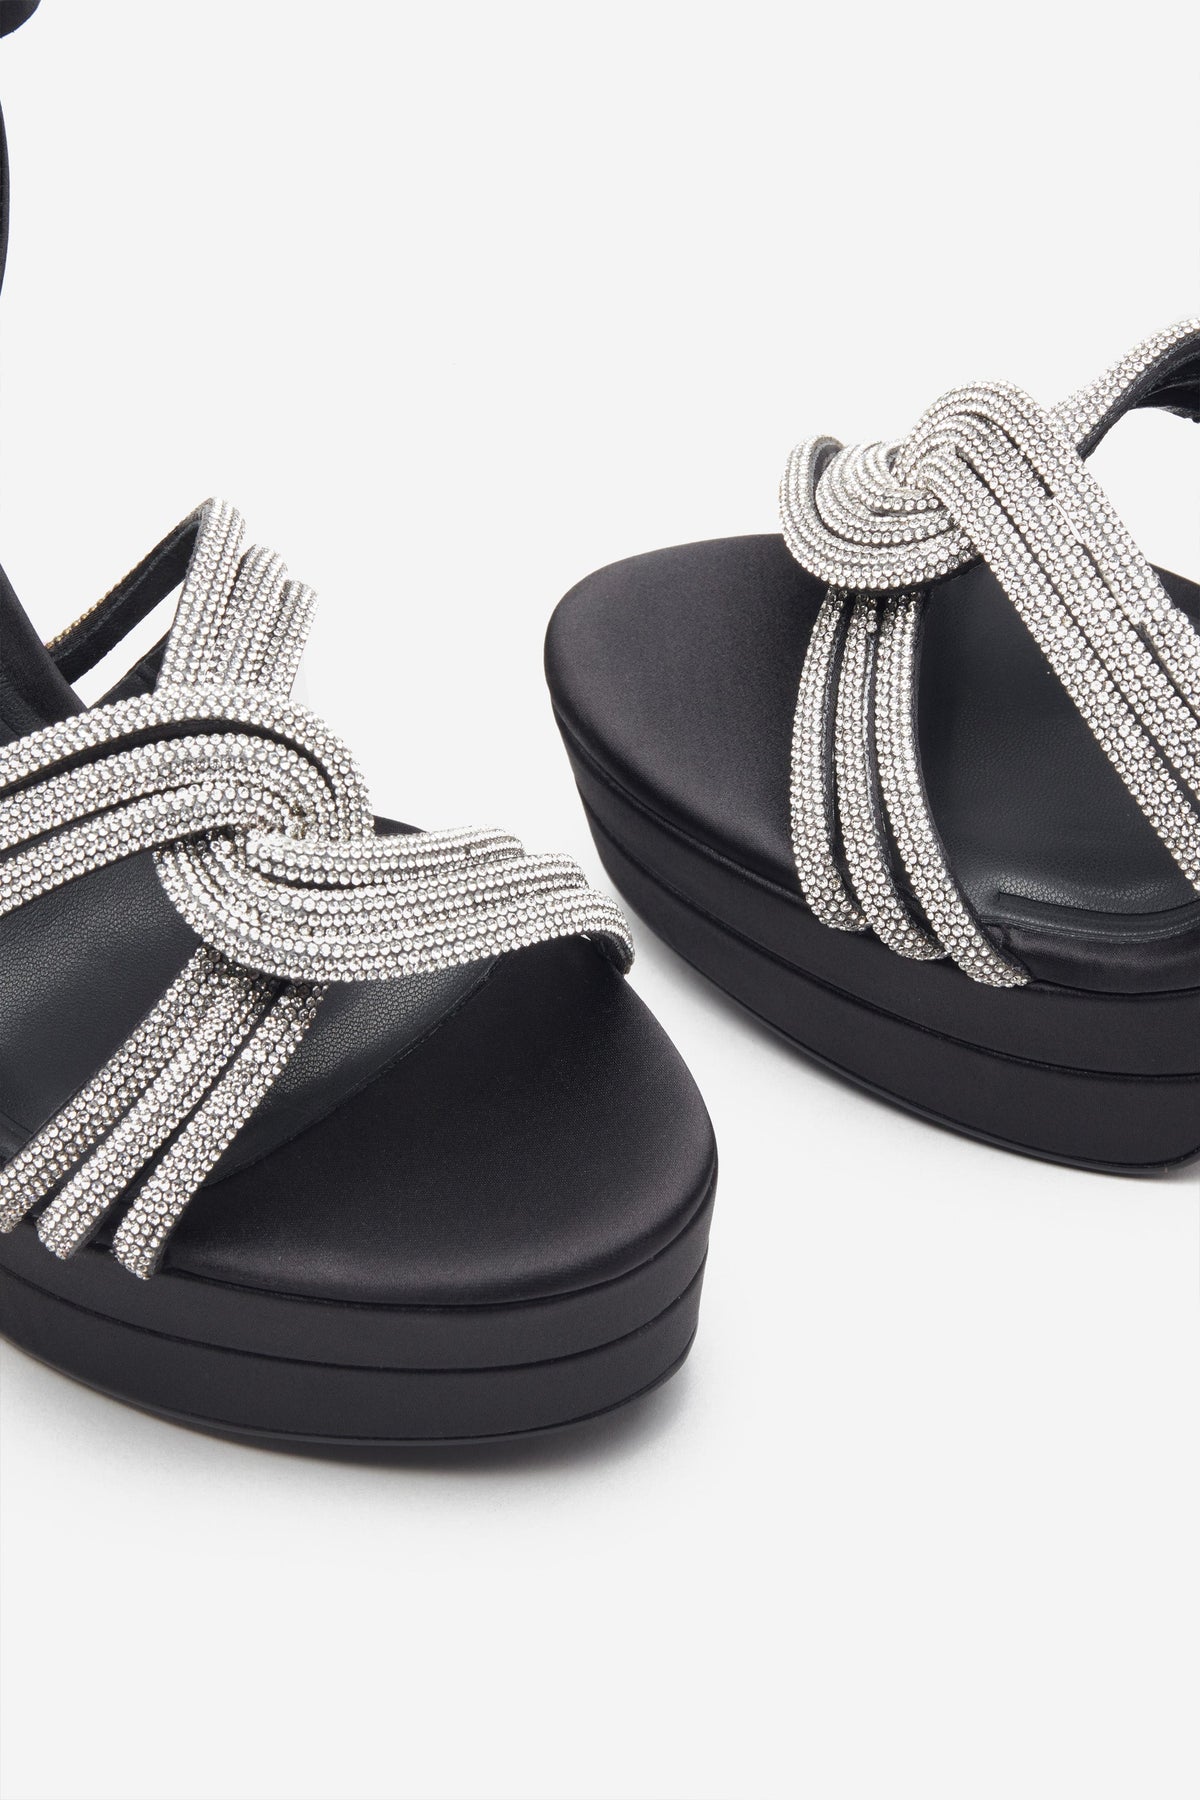 White Square Toe Strappy Heels | Strappy White Sandals Heels | White Luxury  Sandals - Women's Sandals - Aliexpress